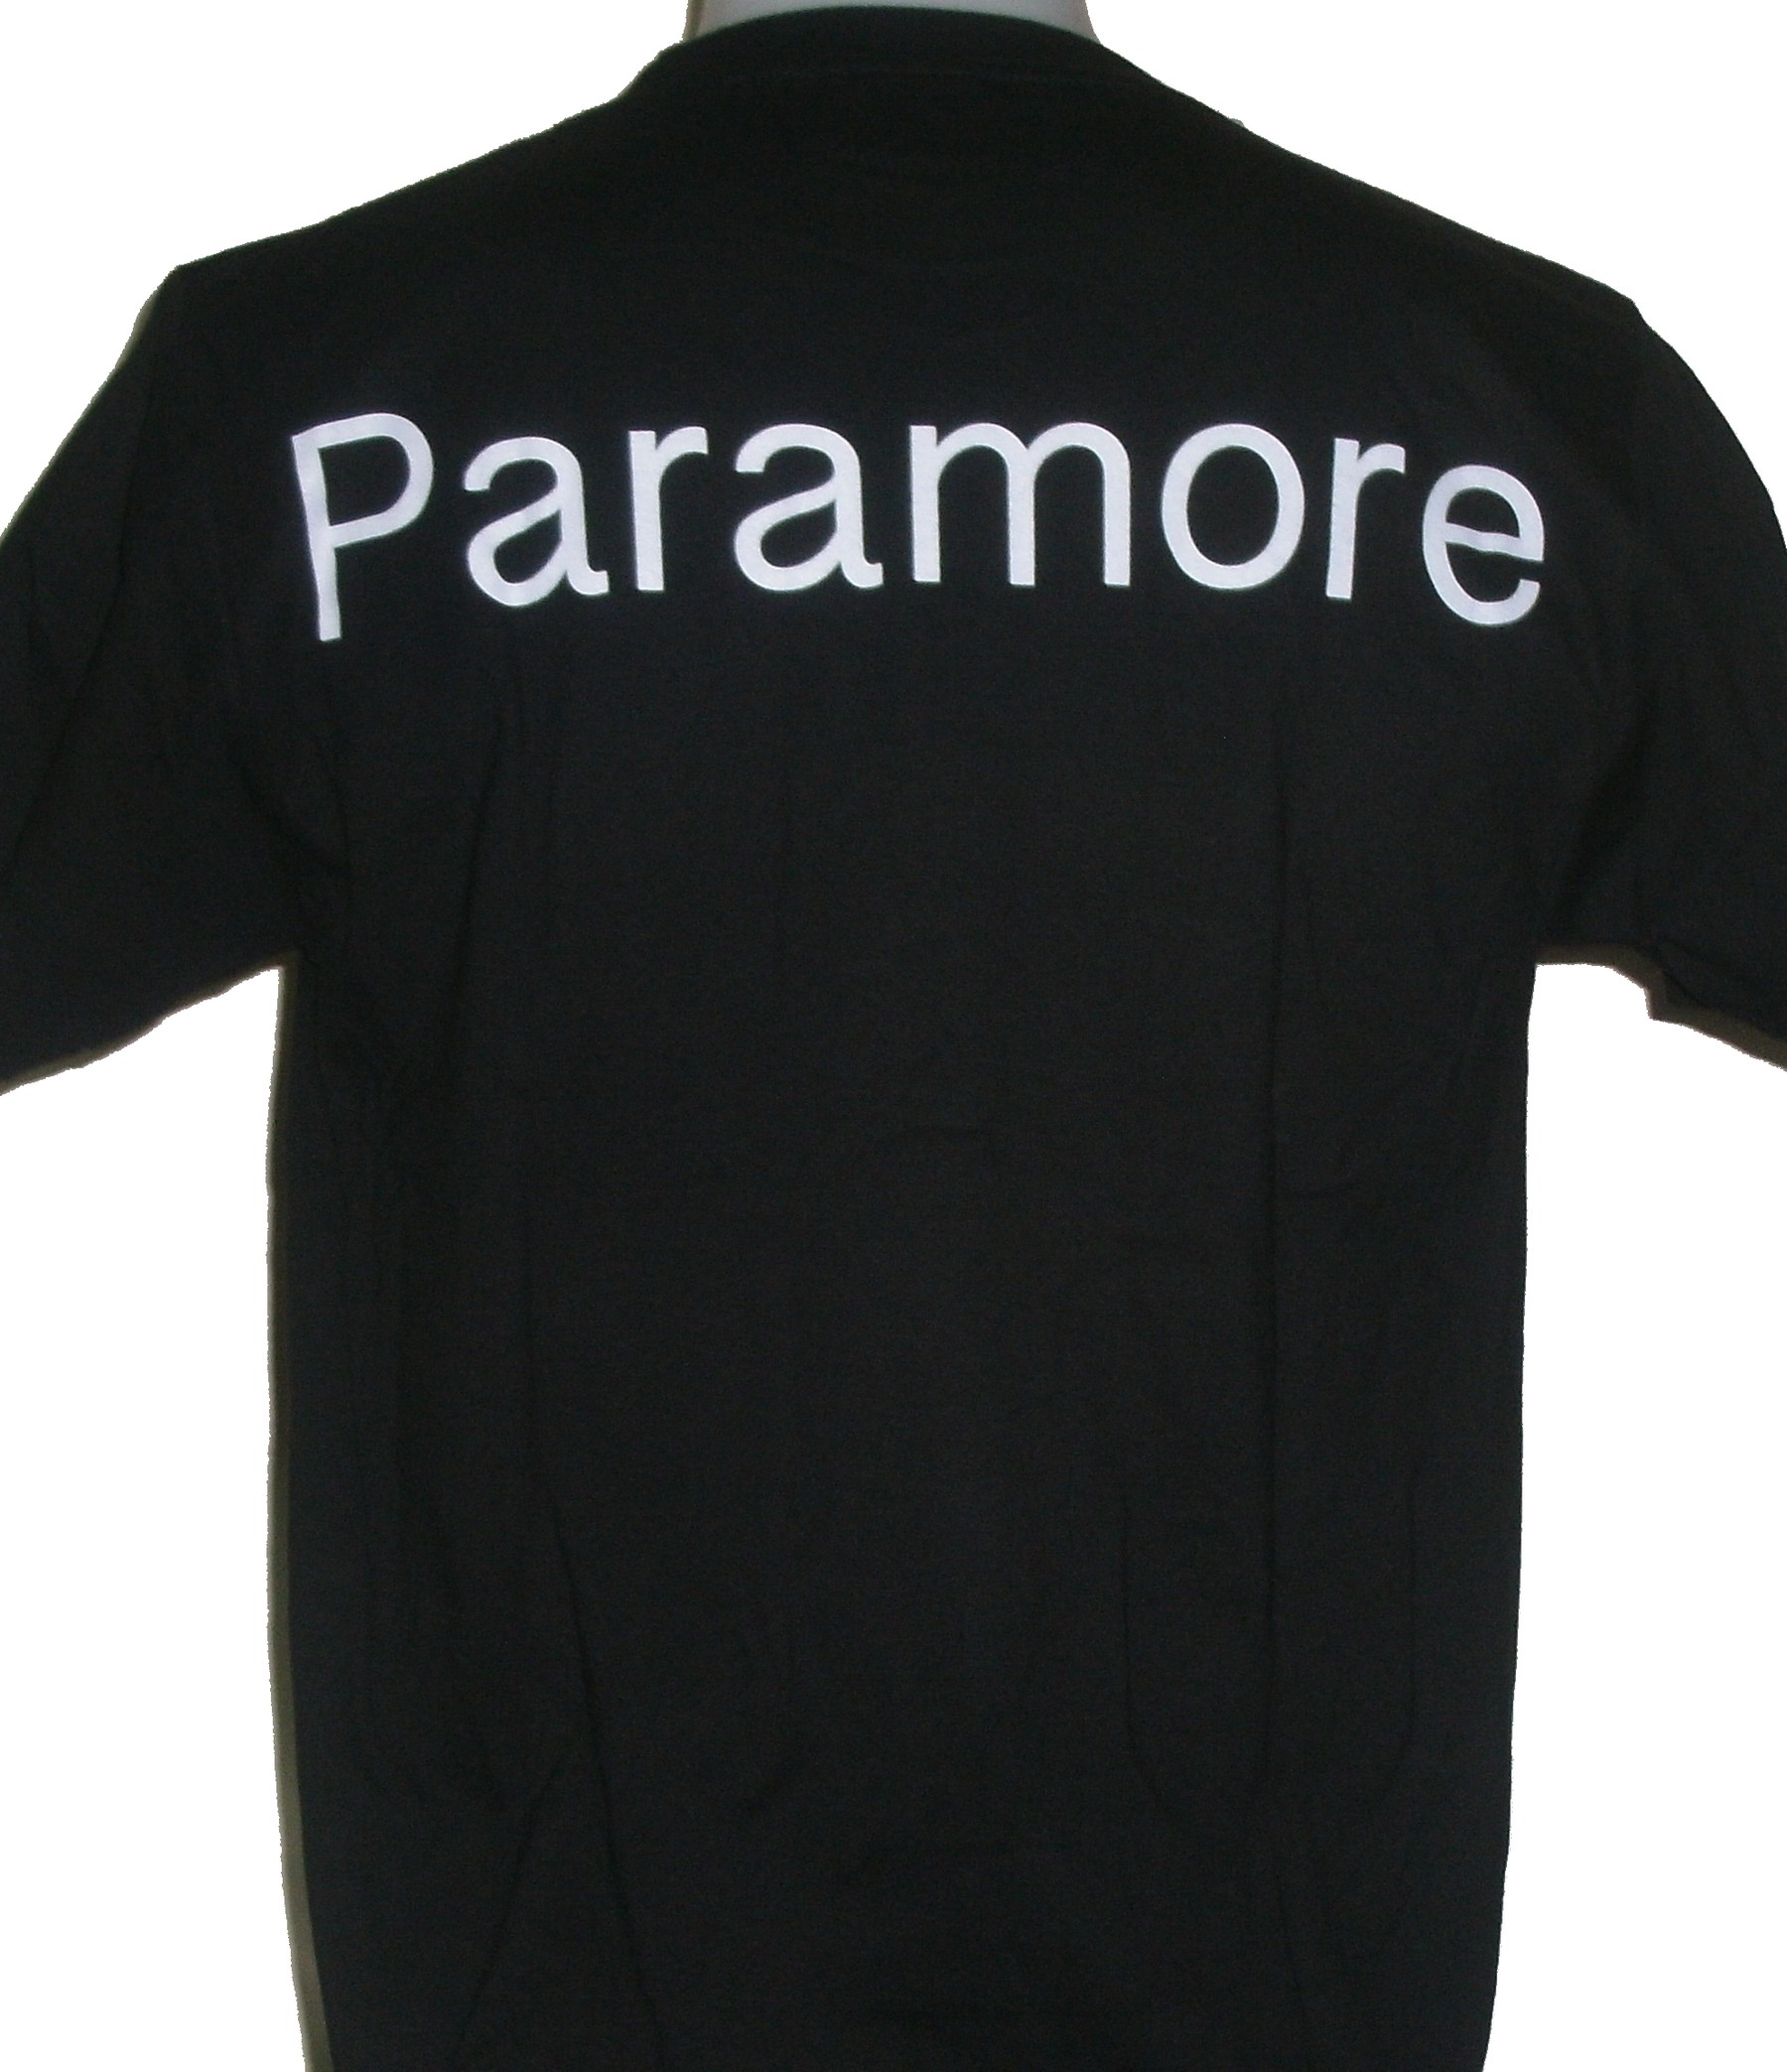 Paramore T-shirt Brand New Eyes T-shirt